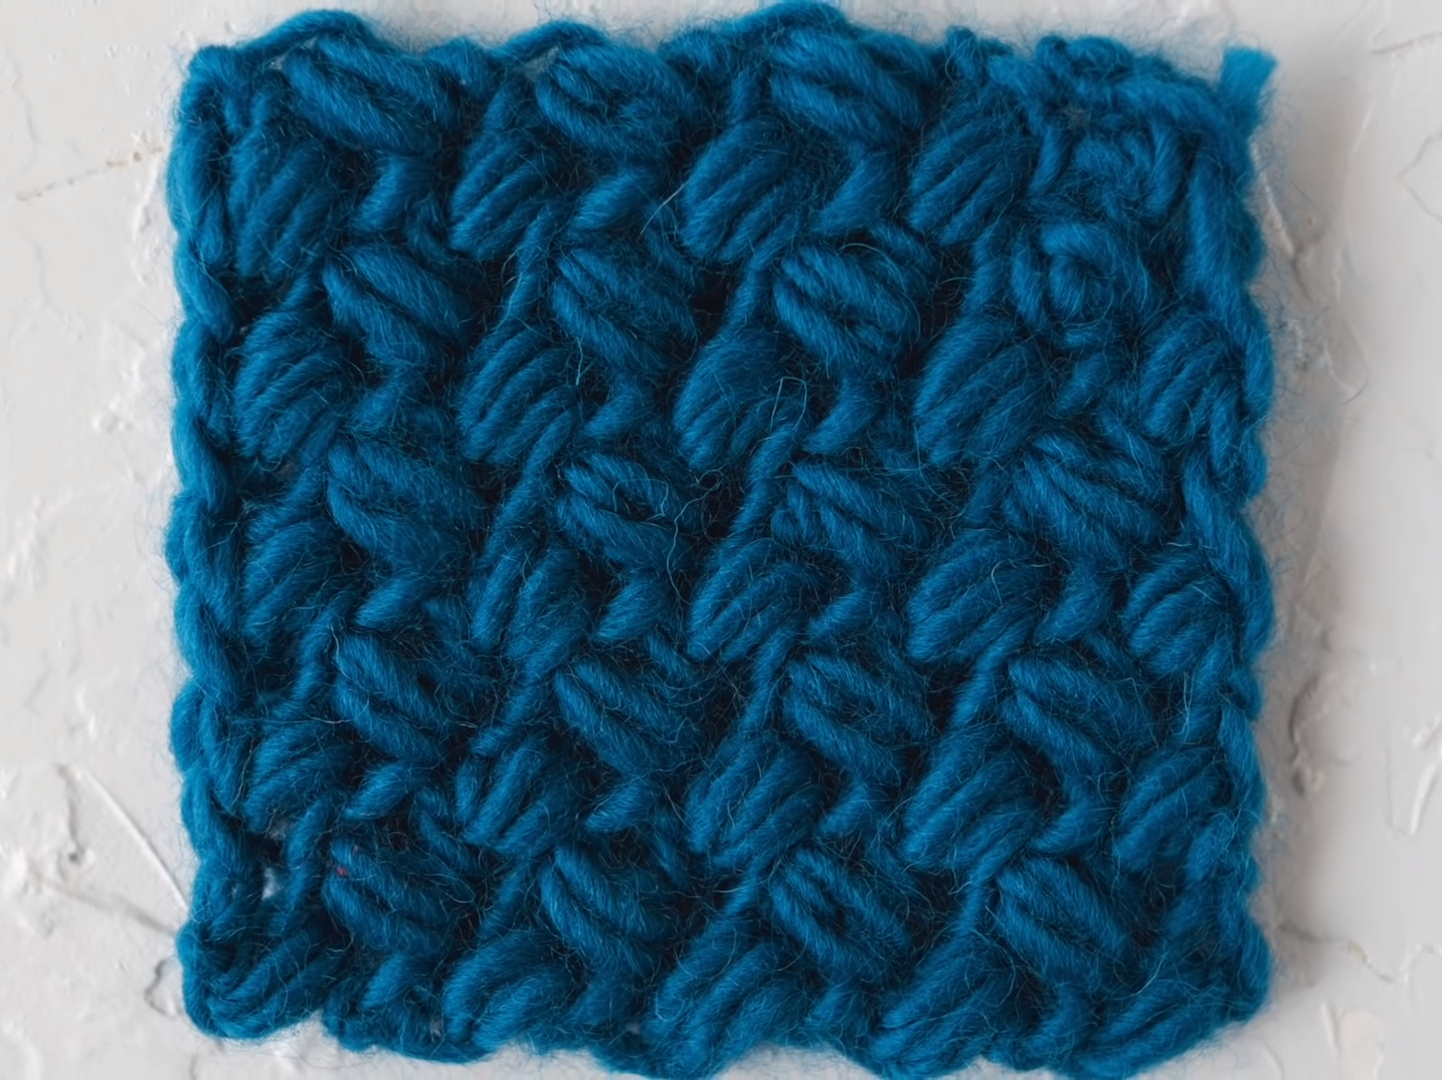 Crochet Bean Stitch.